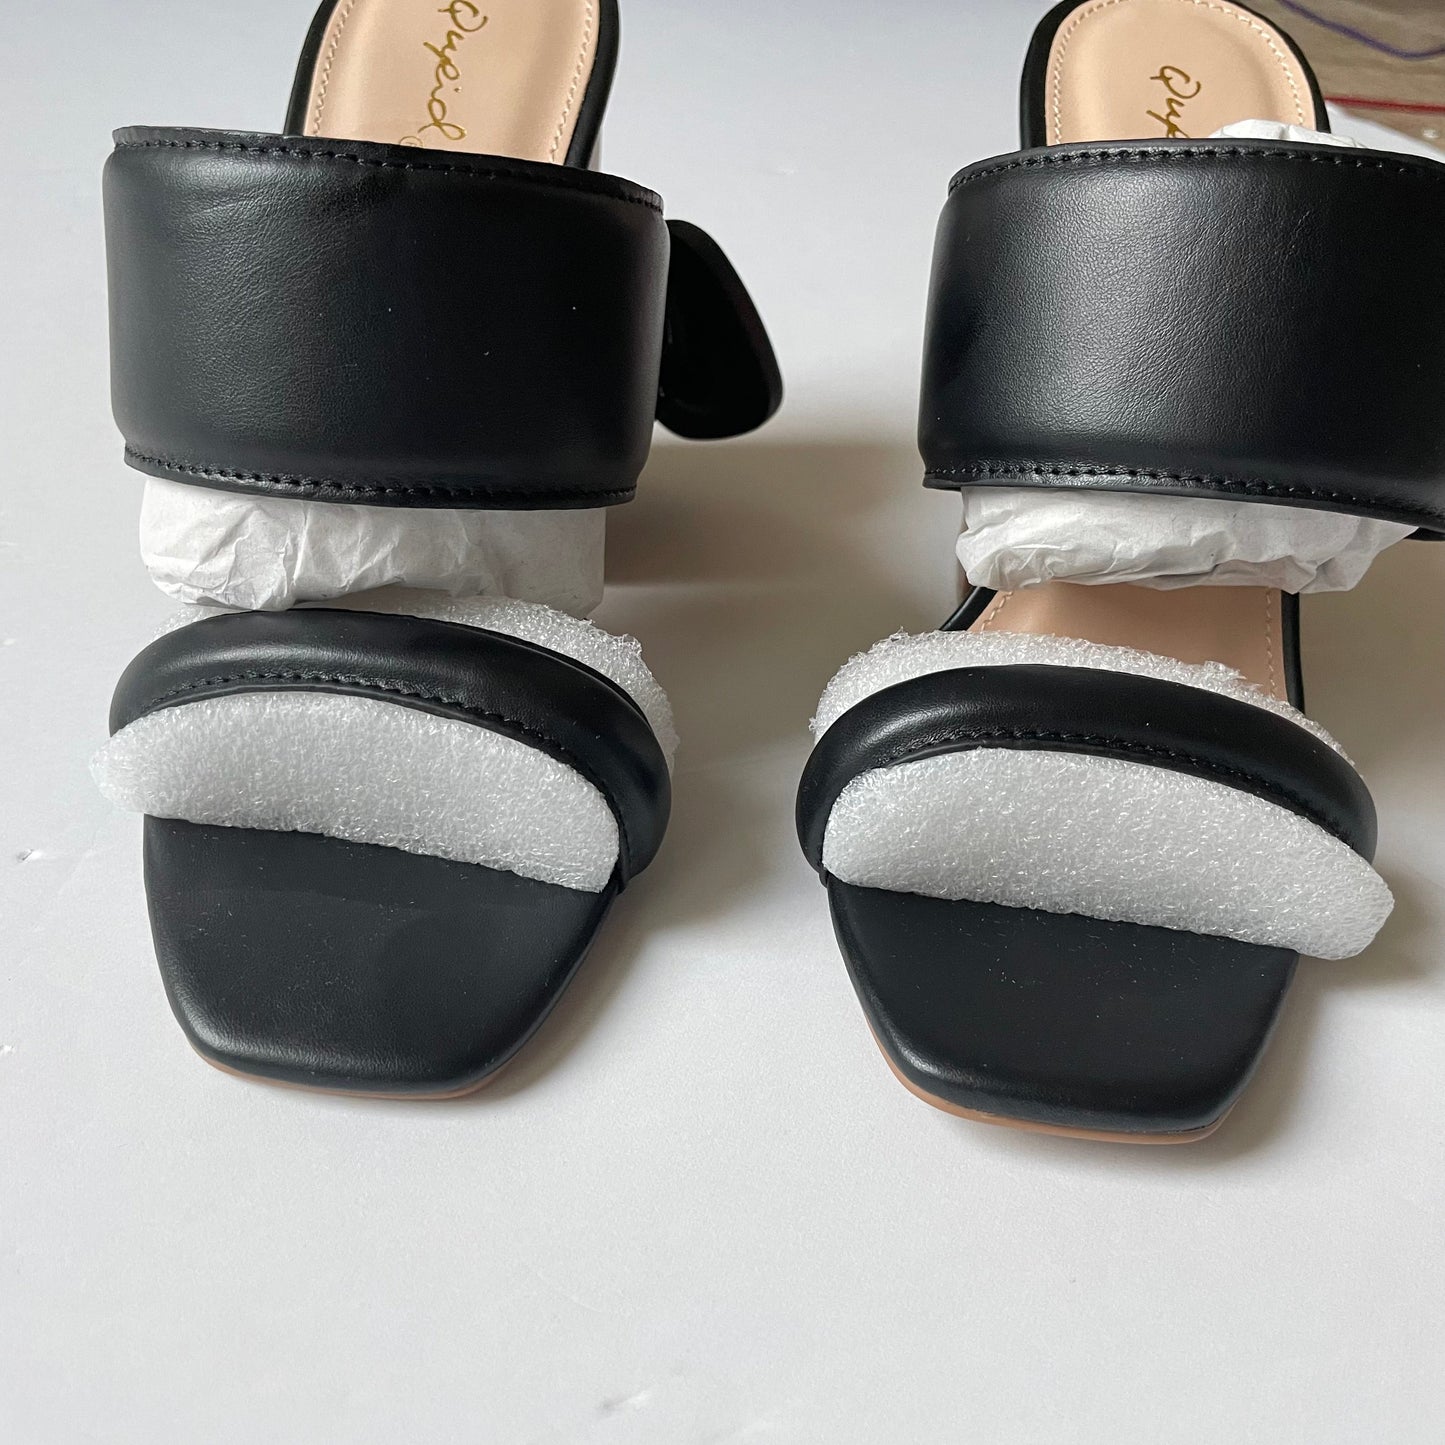 Black Shoes Heels Block Qupid, Size 8